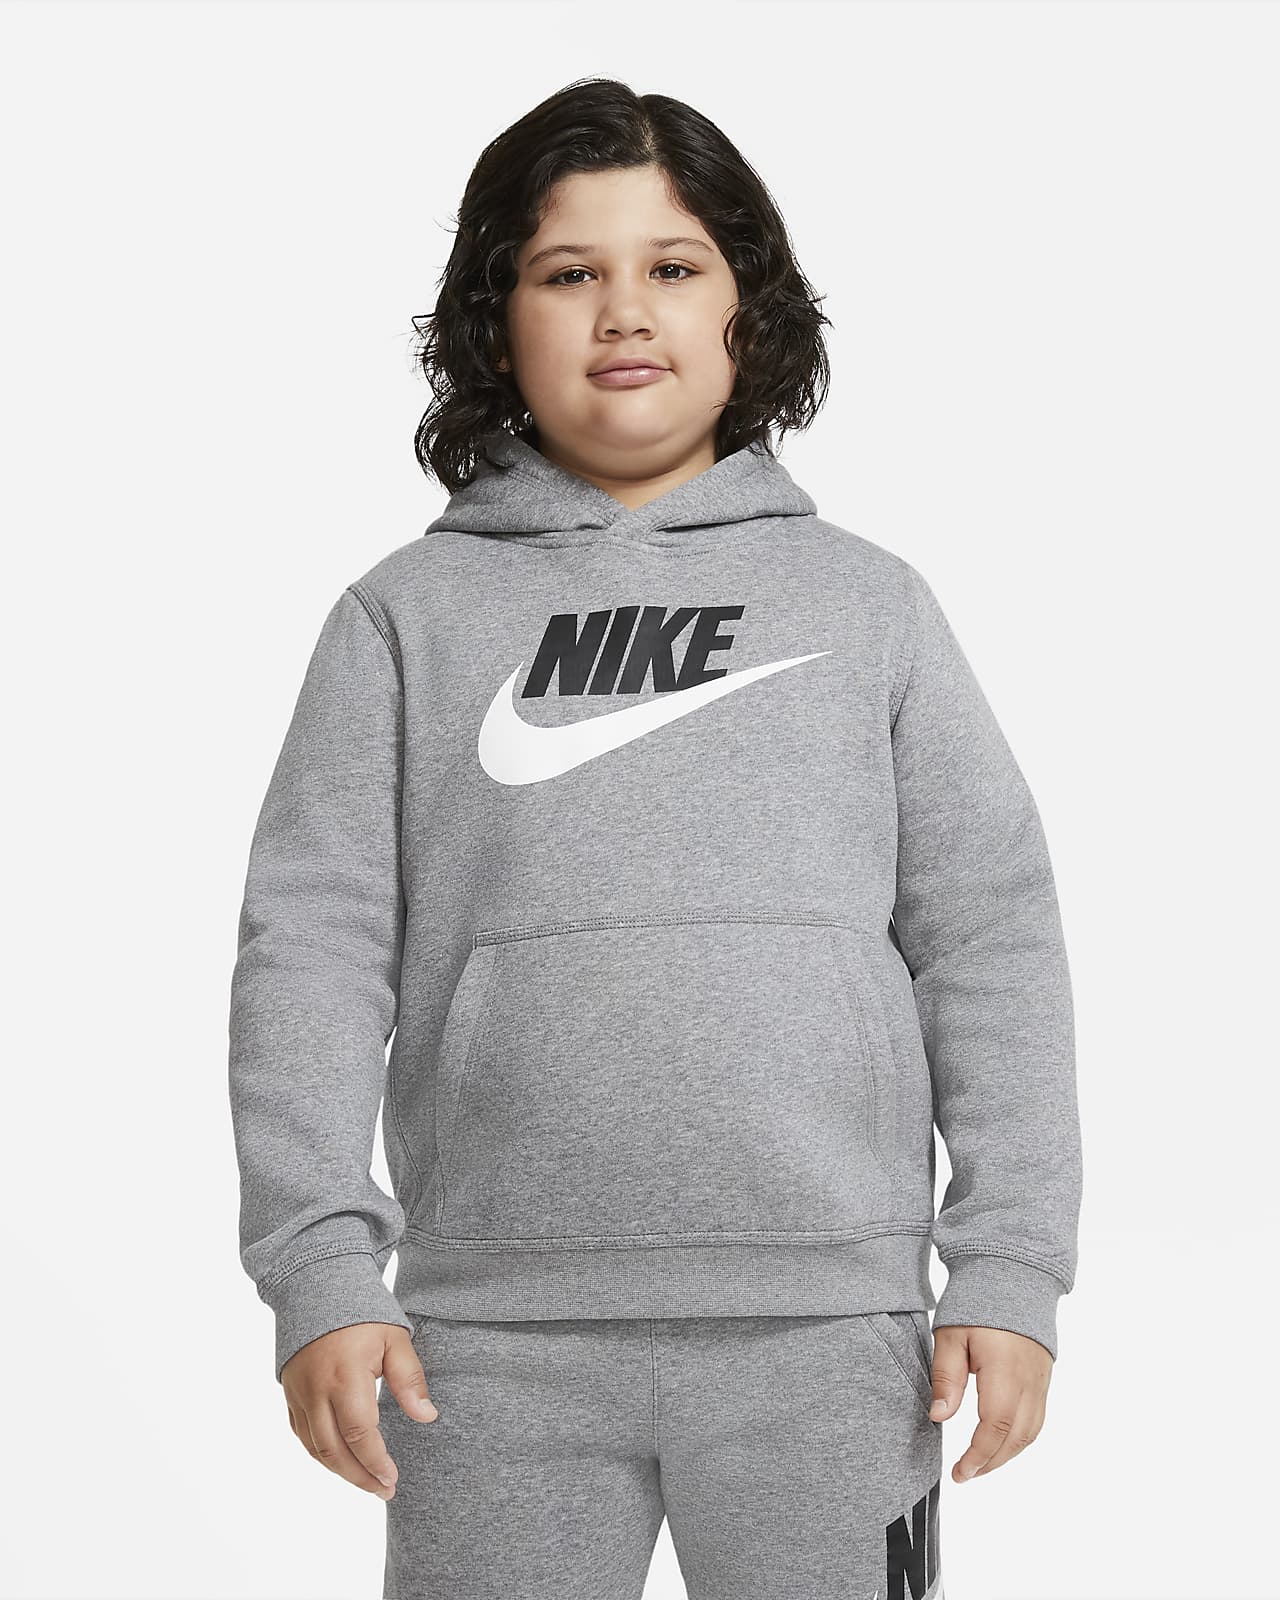 Nike Sportswear Club Older Pullover Hoodie (Extended Size). LU